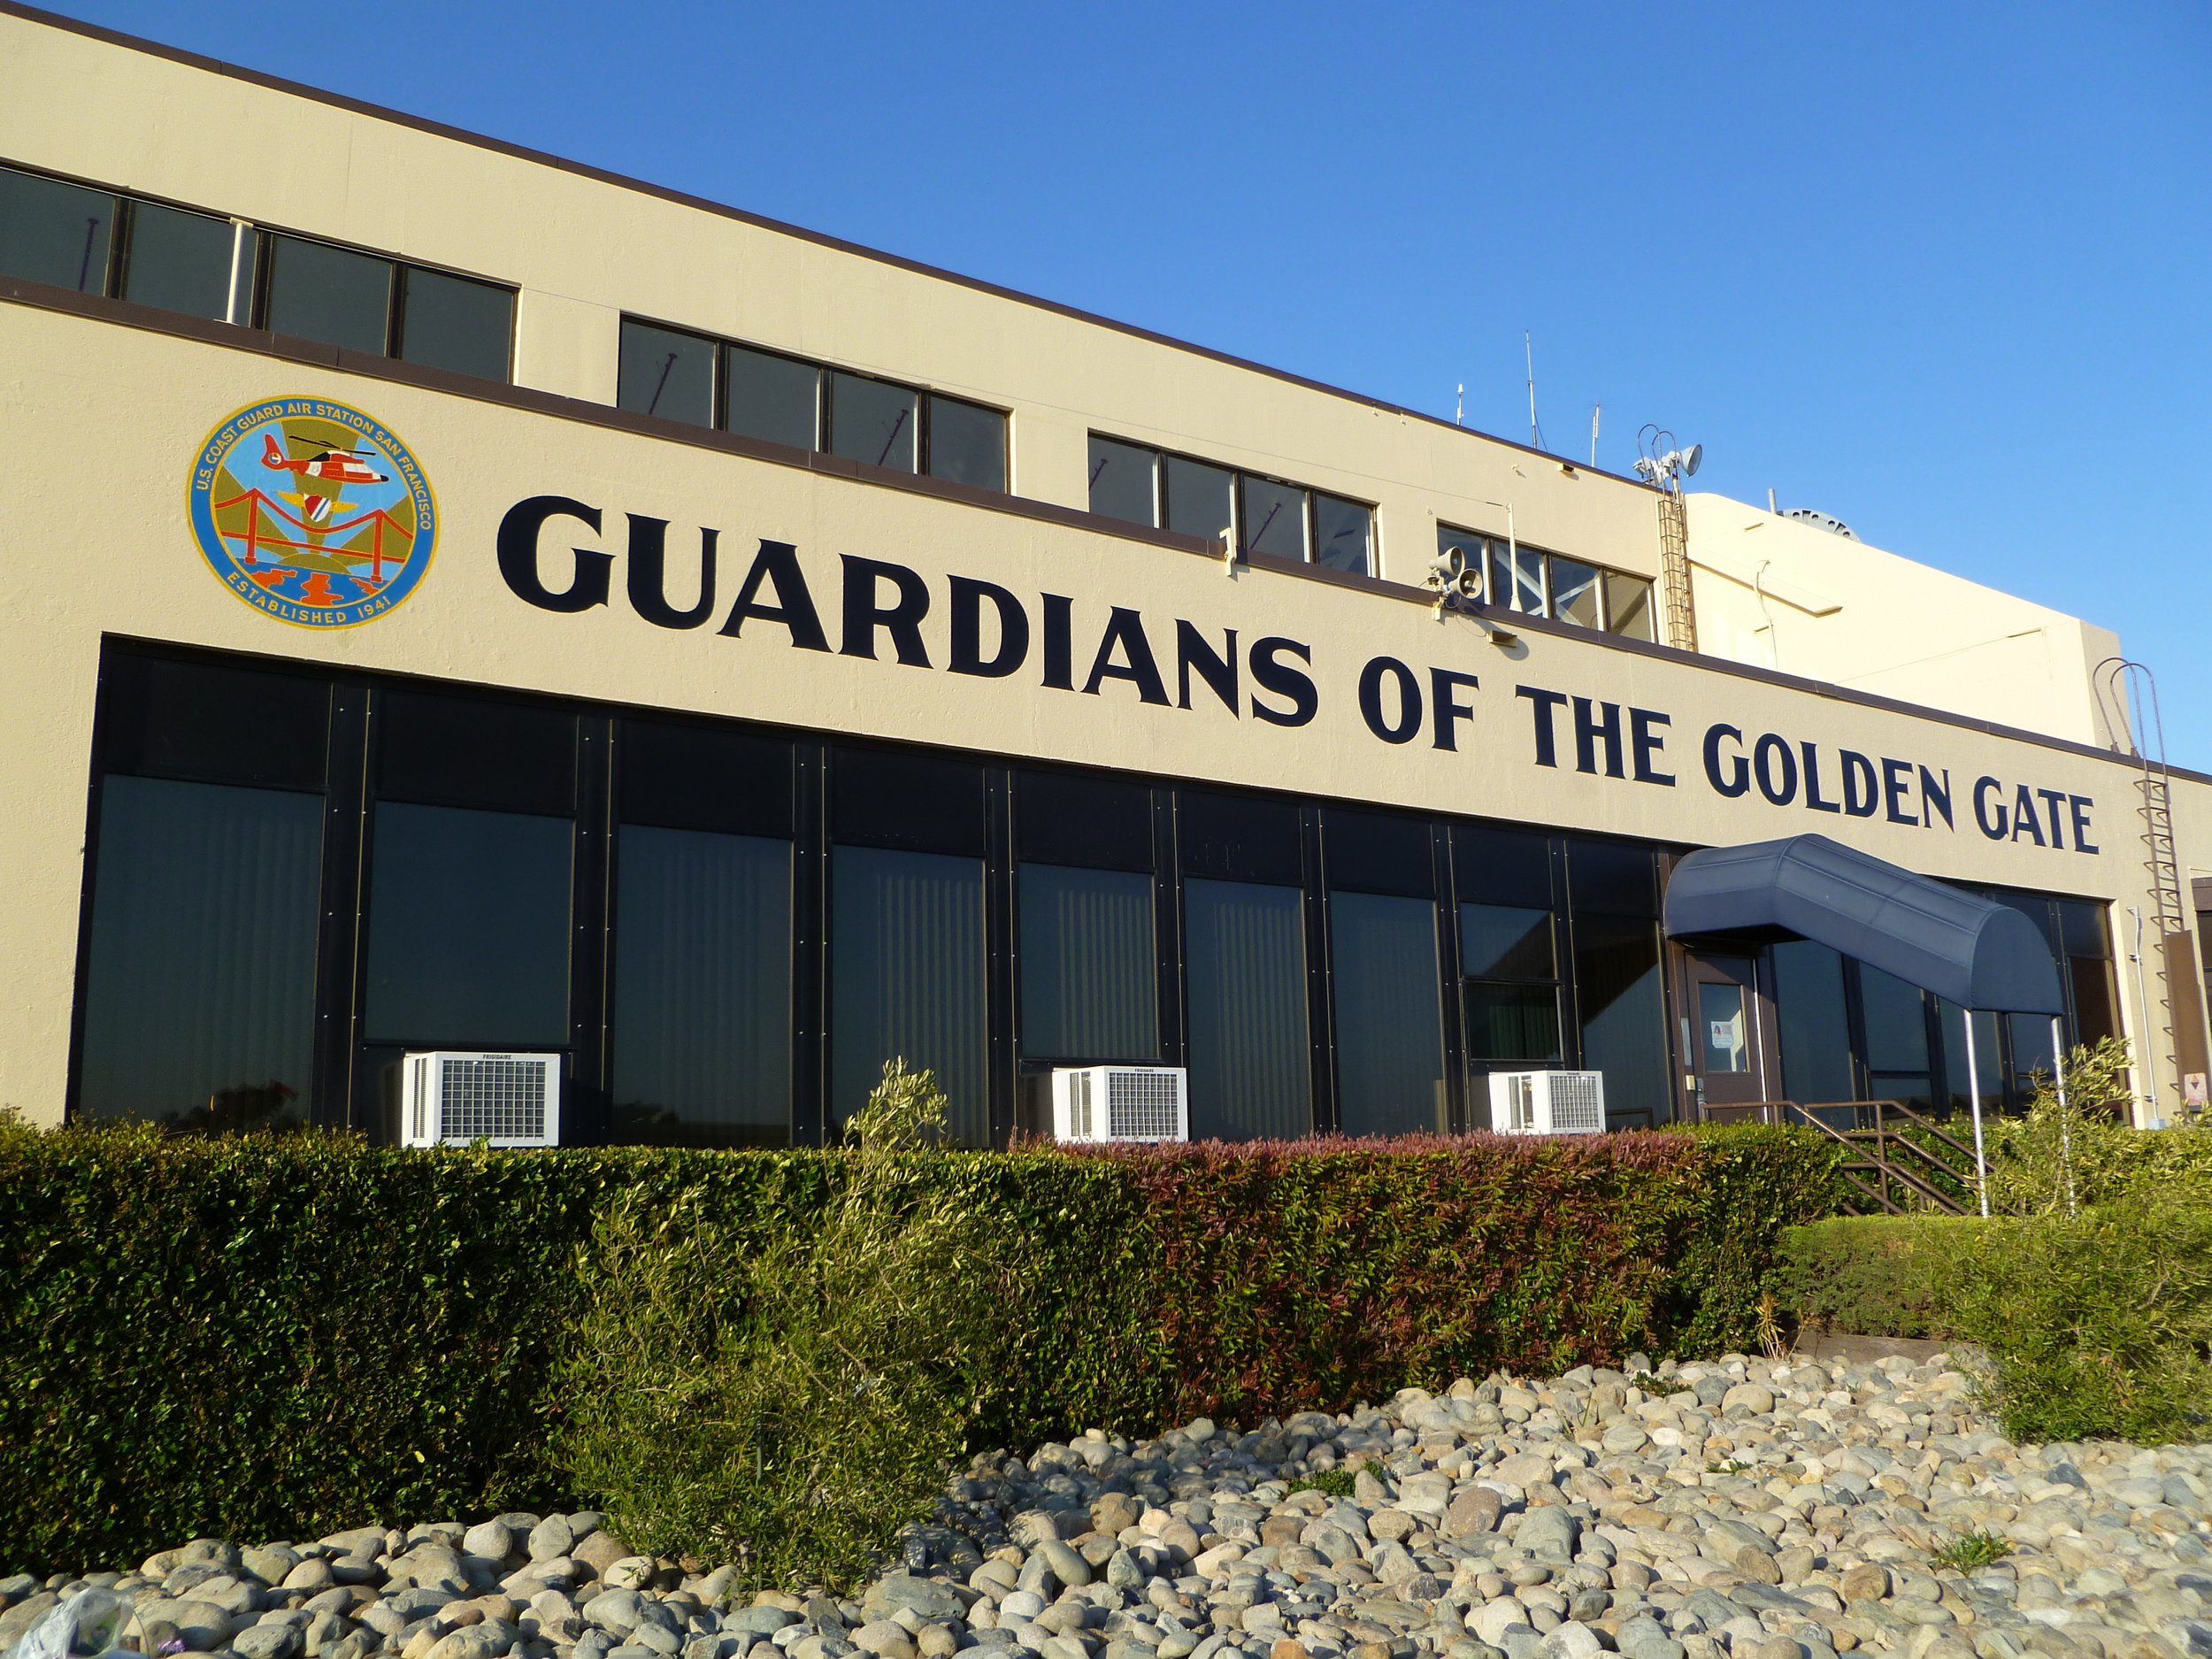 HAND-guardians-of-the-golden-gate_5060767729_o.jpg